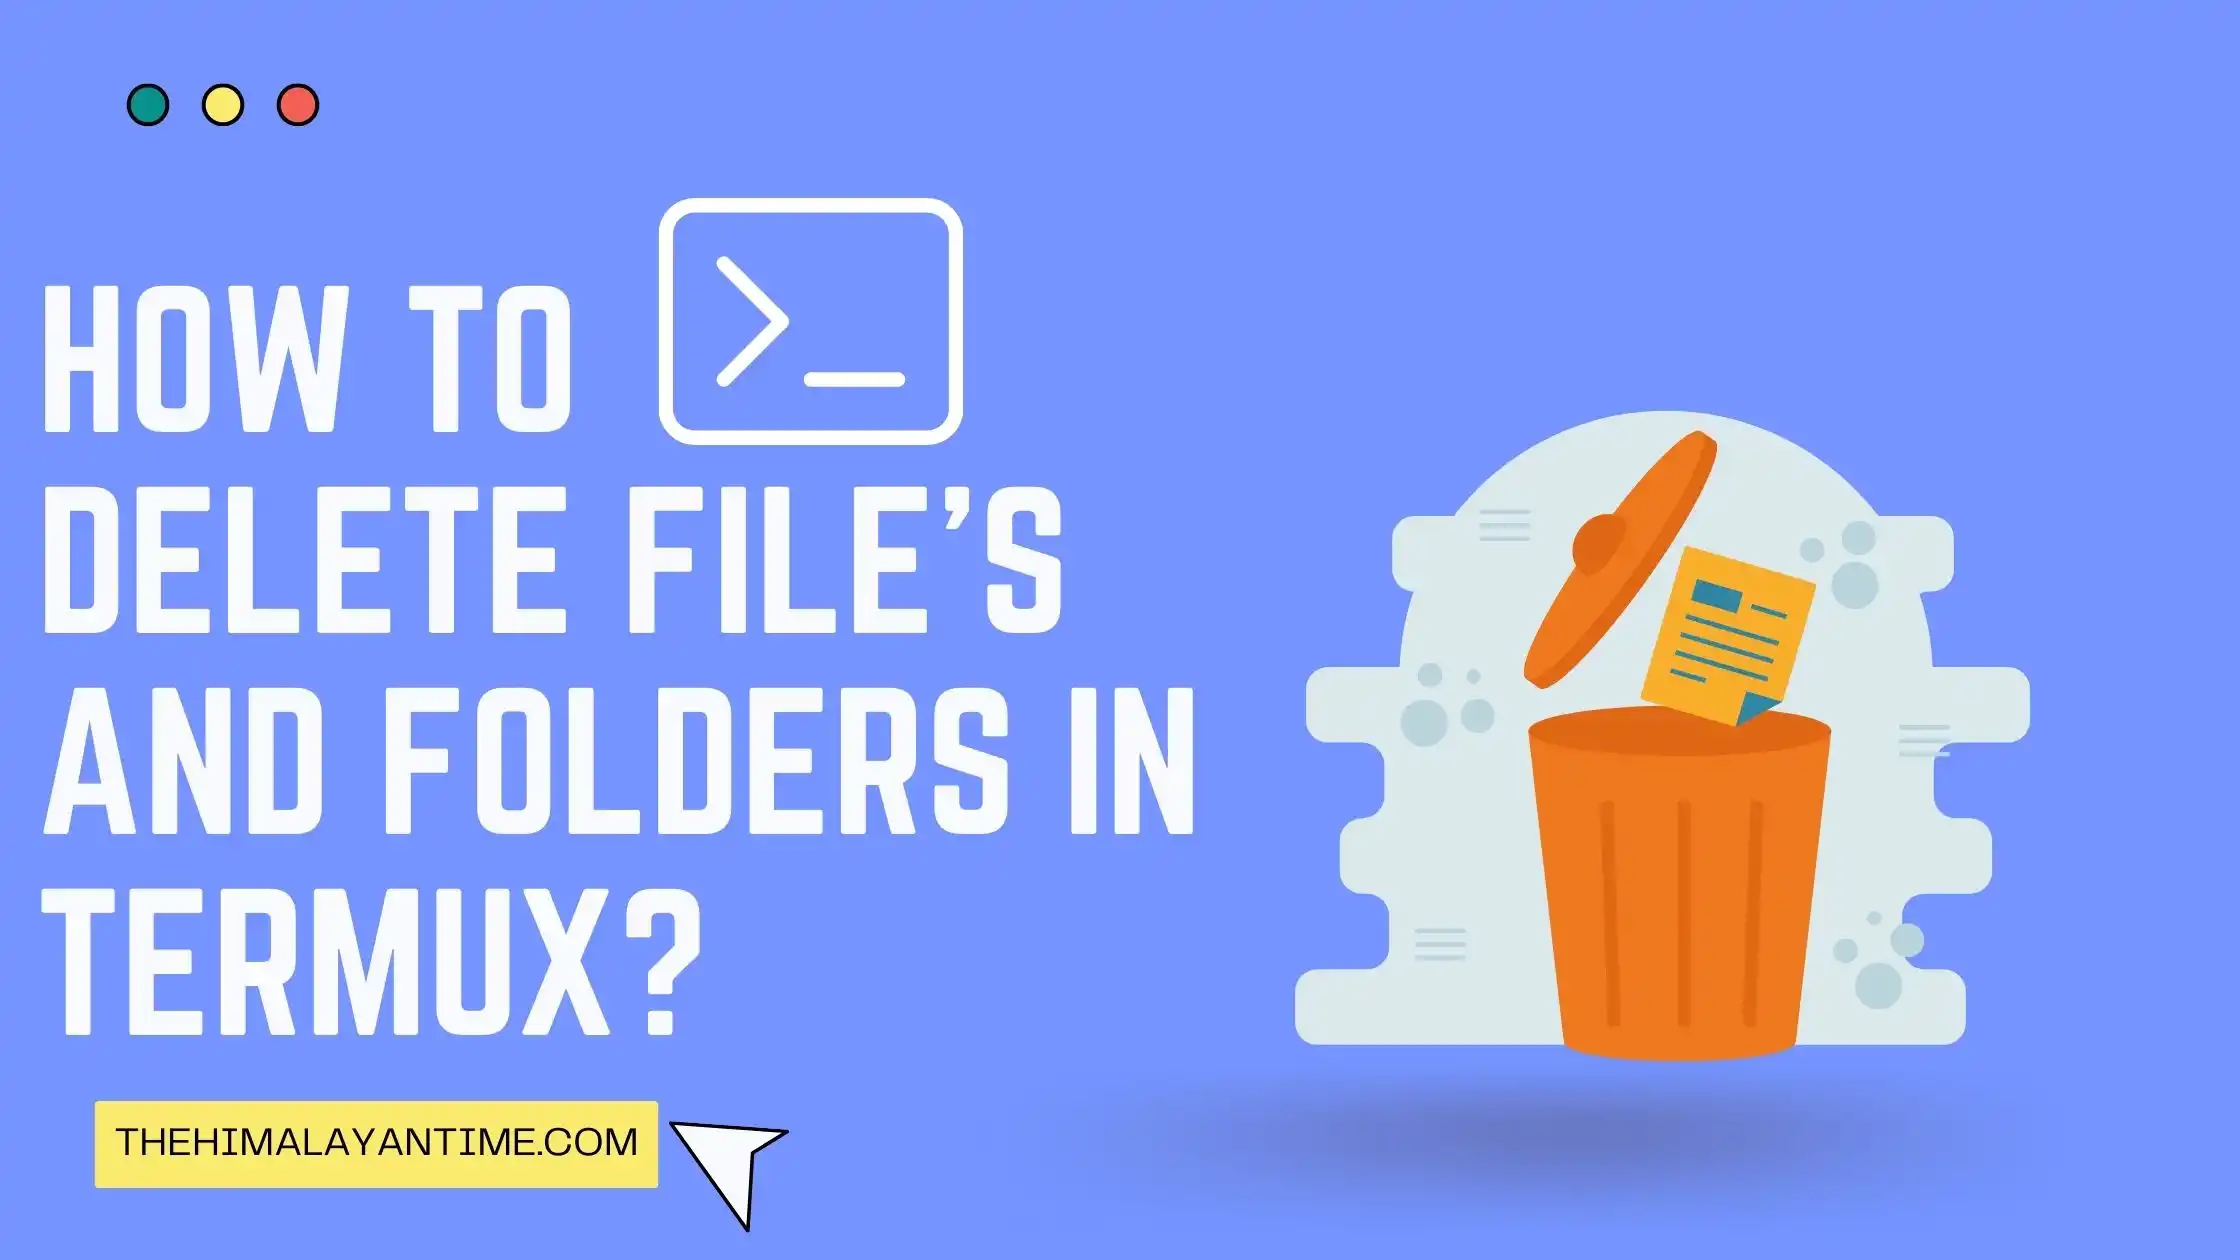 delete file and folders in termux